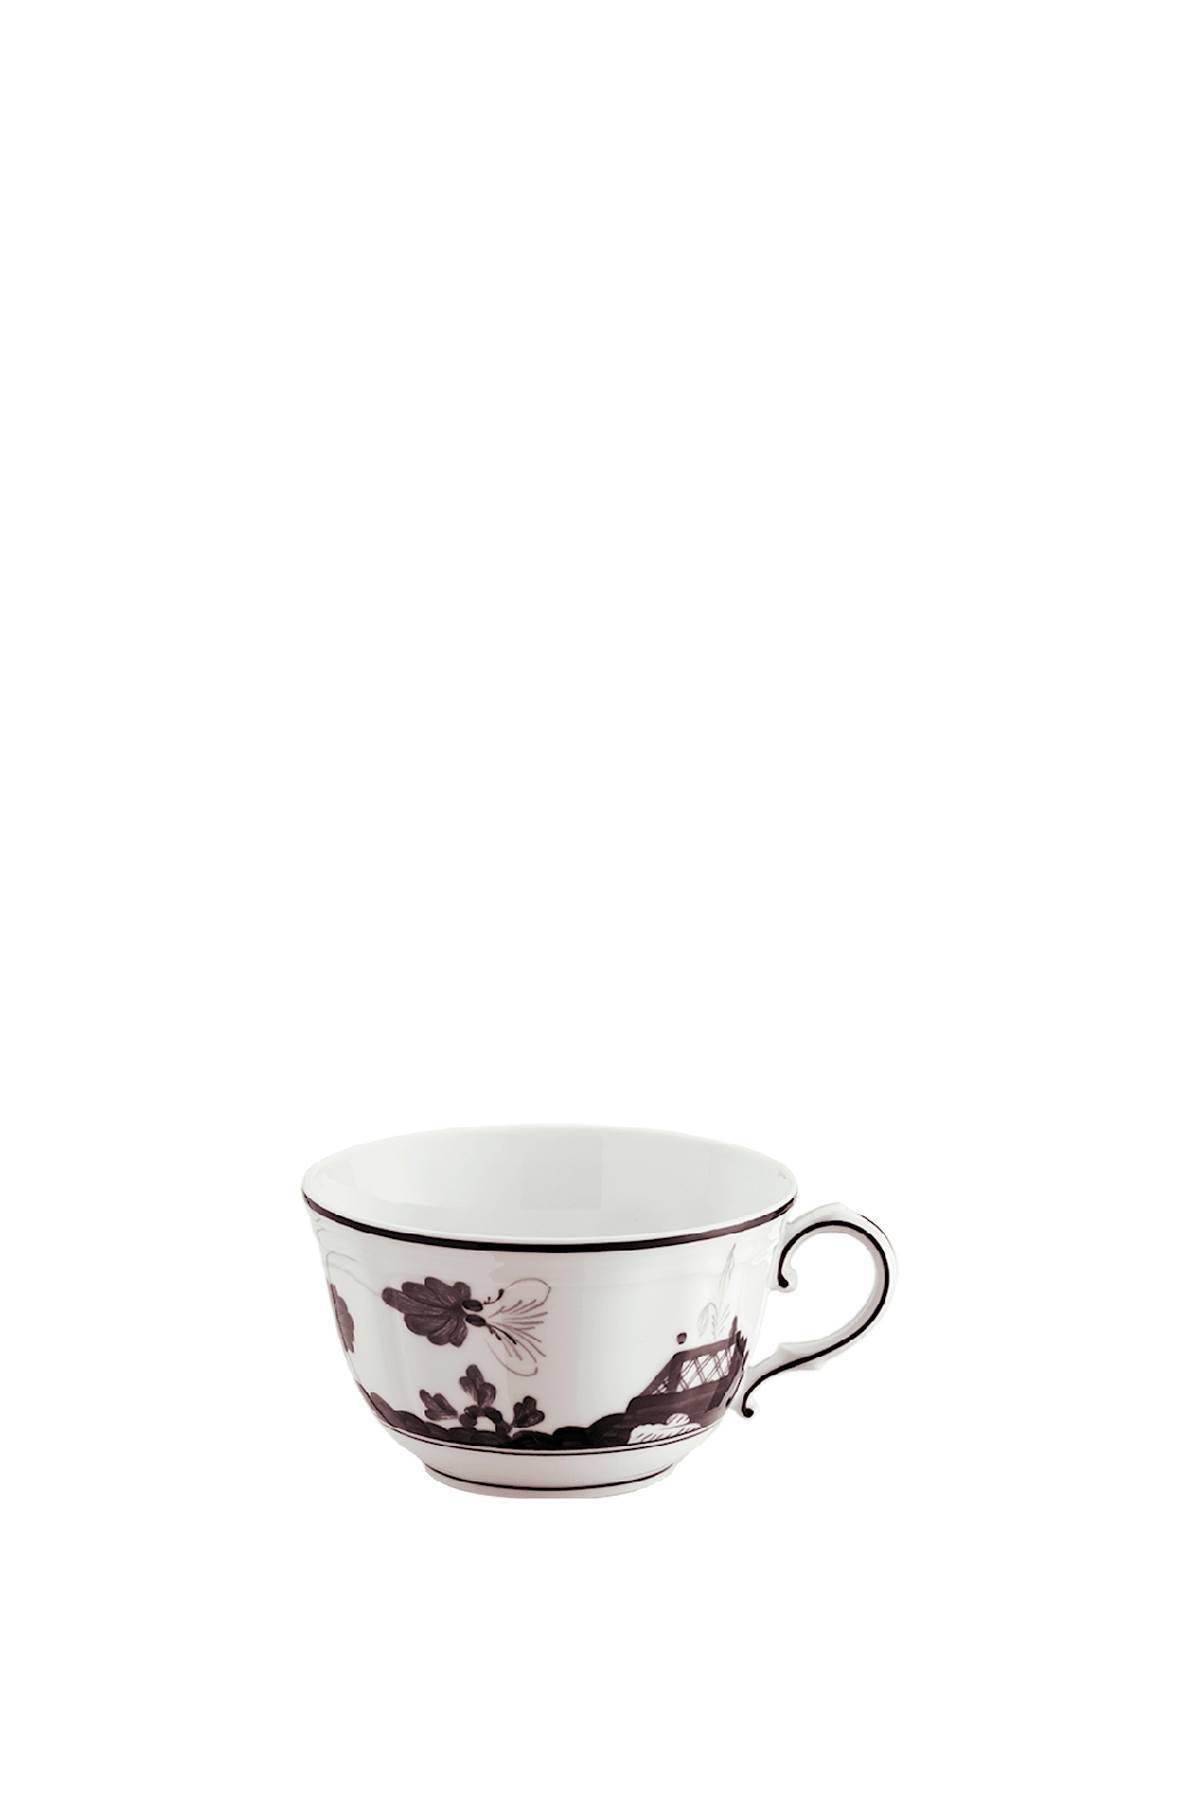 GINORI 1735 GINORI 1735 'oriente italiano' tea cup